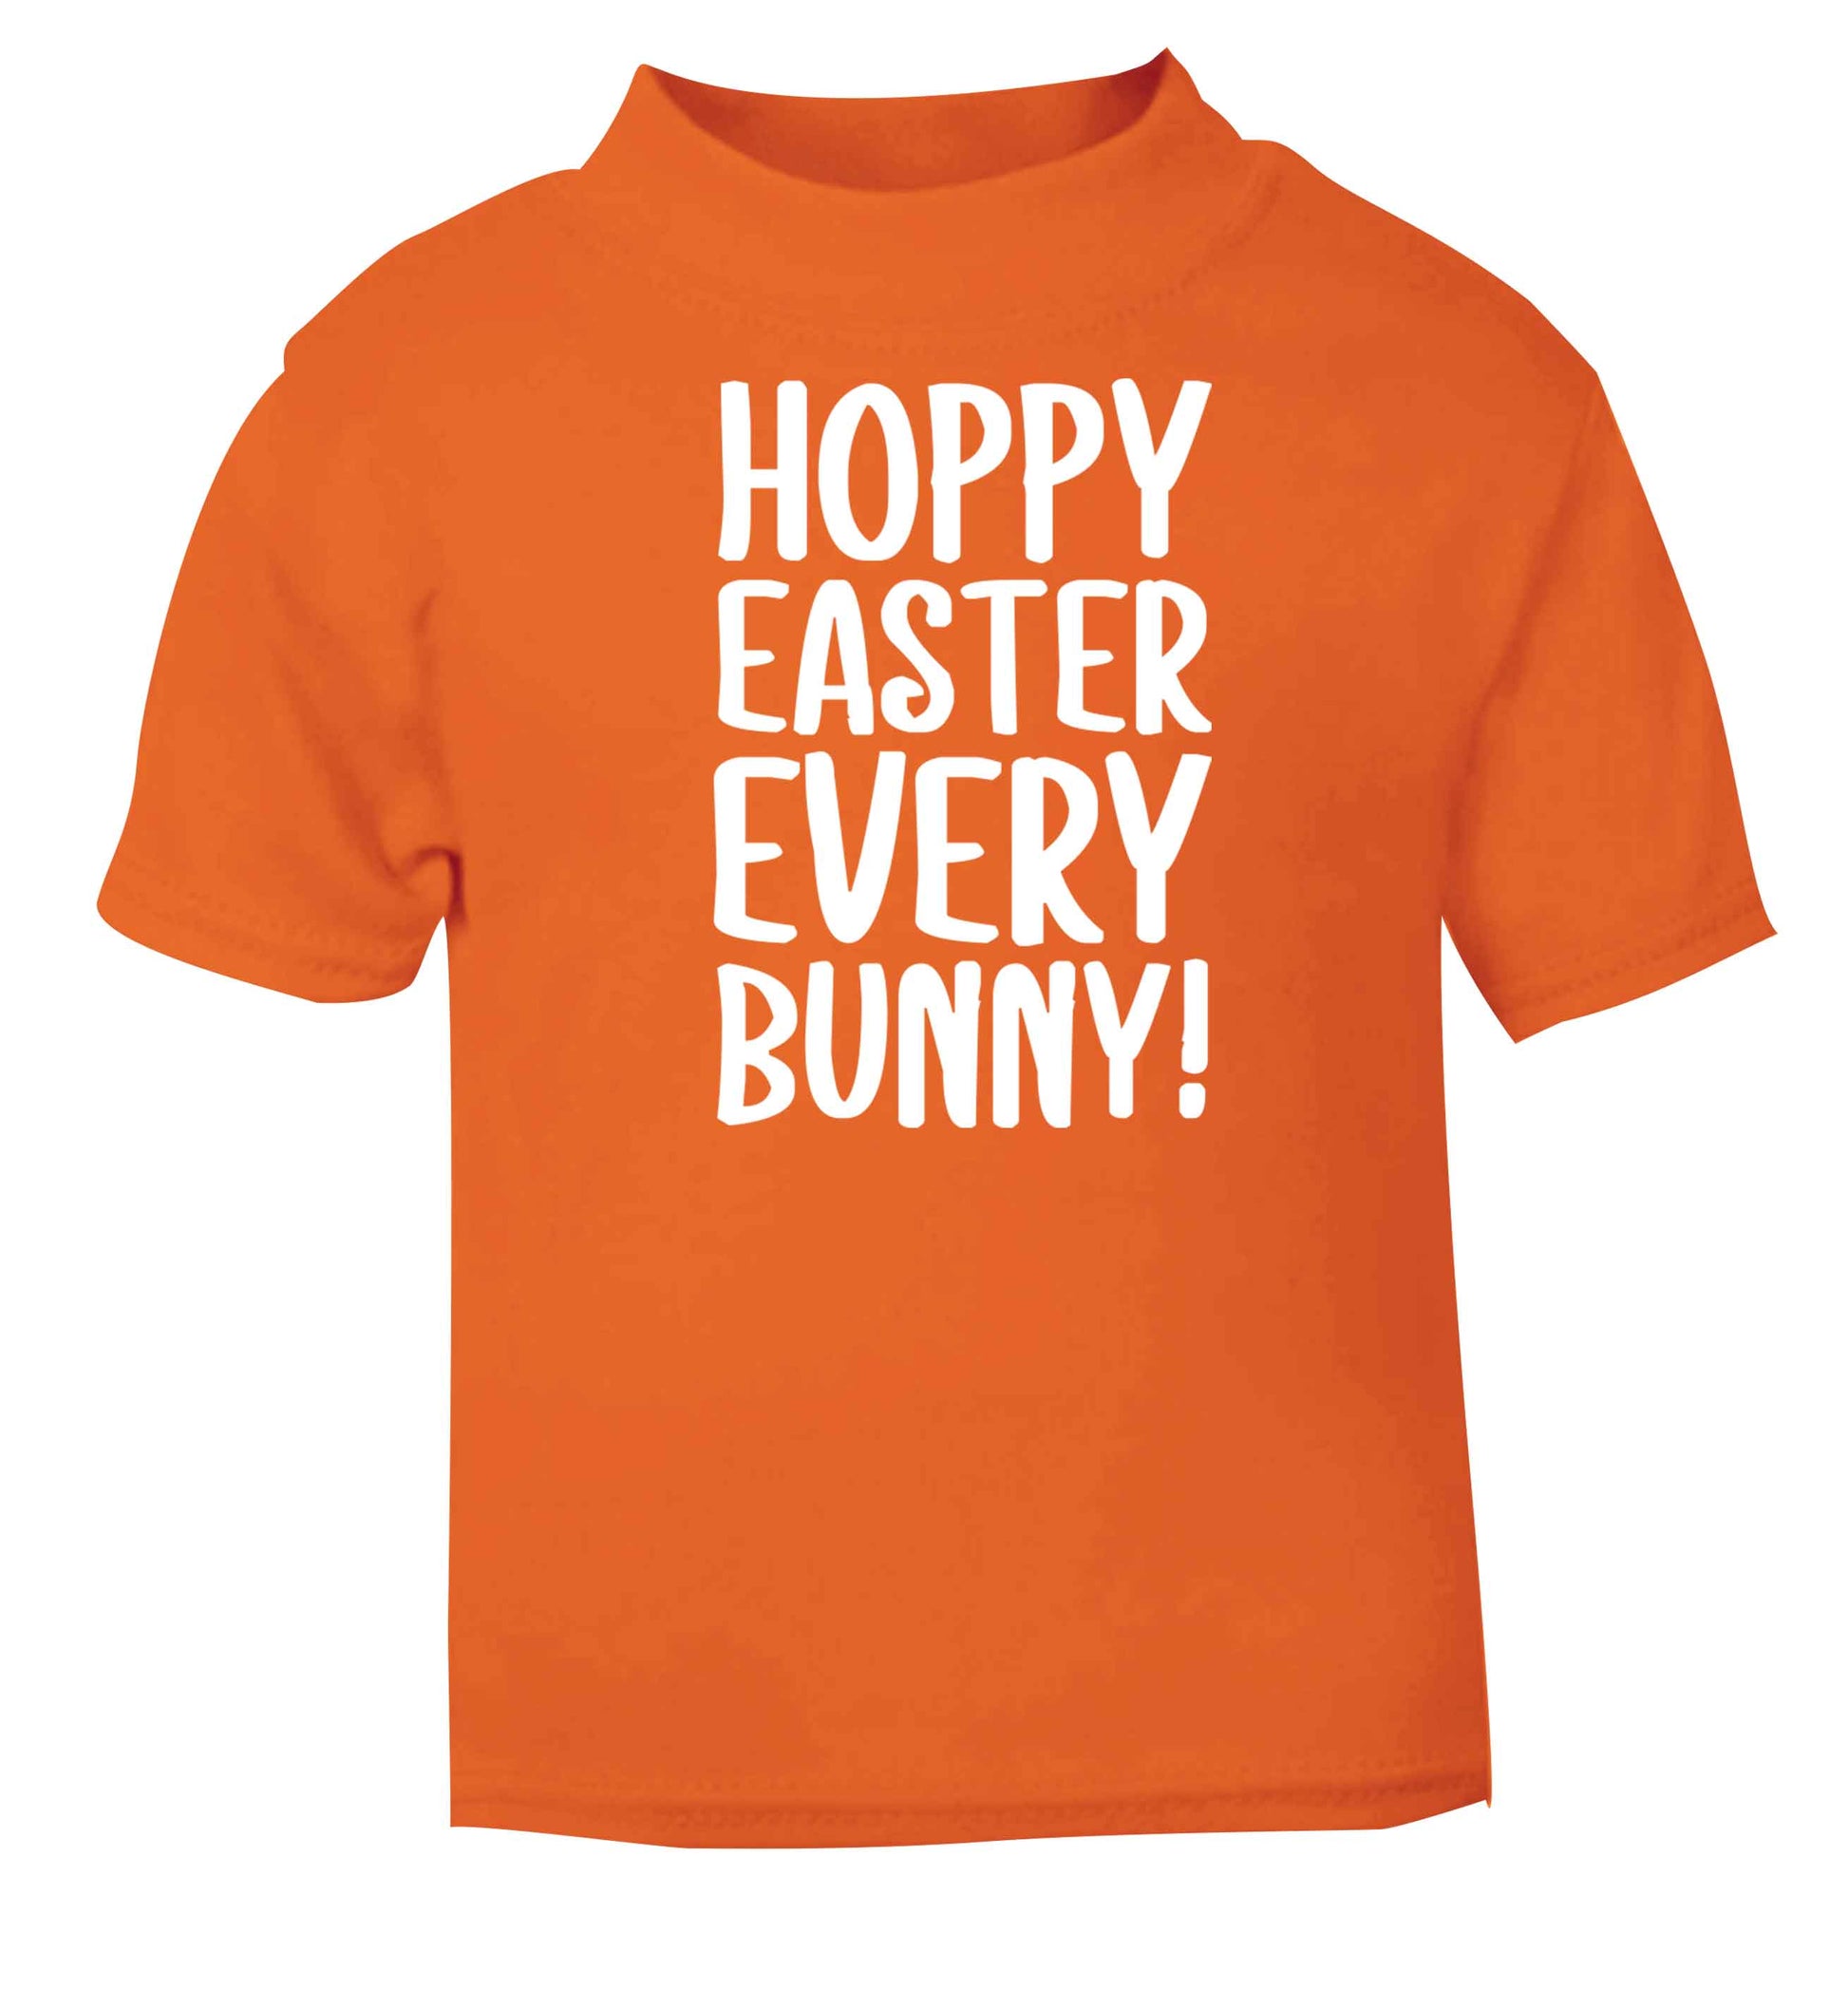 Hoppy Easter every bunny! orange baby toddler Tshirt 2 Years